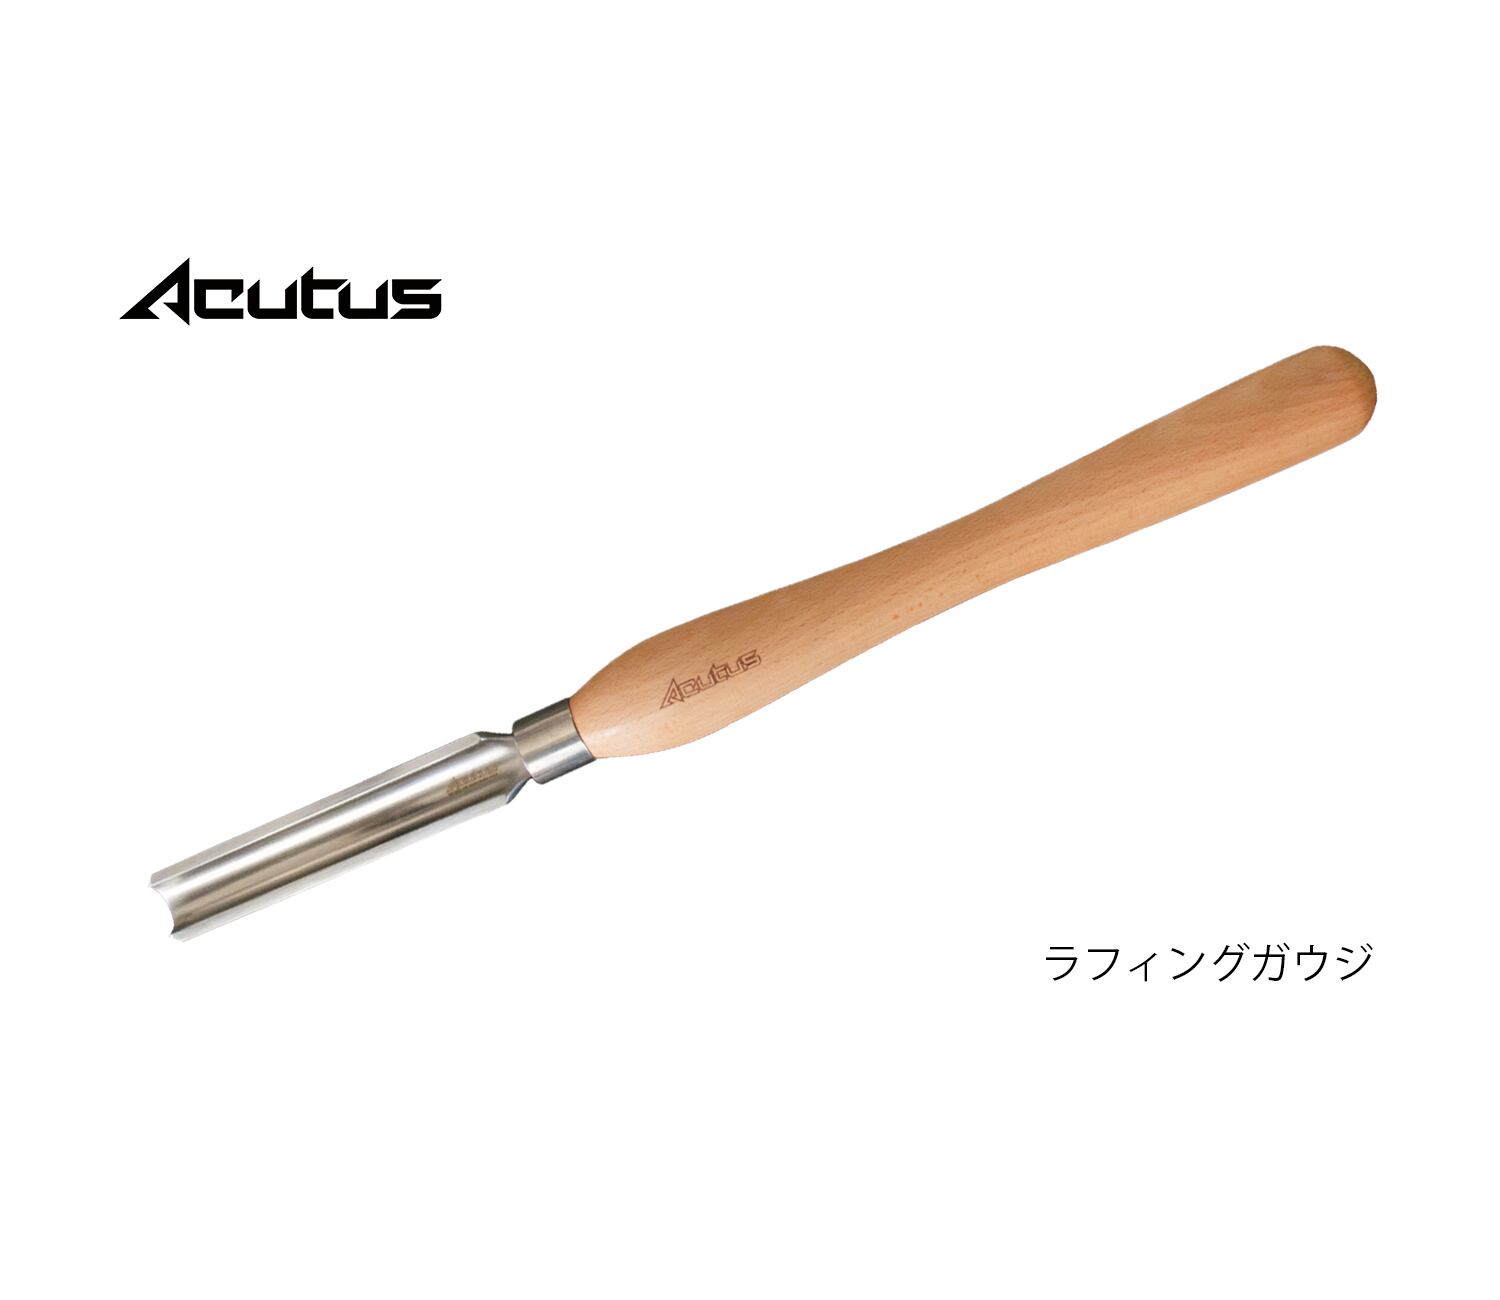 ACUTUS】ターニングツール 『25mm ラフィングガウジ 』ハイス鋼 旋盤用刃物 Nakajima tools